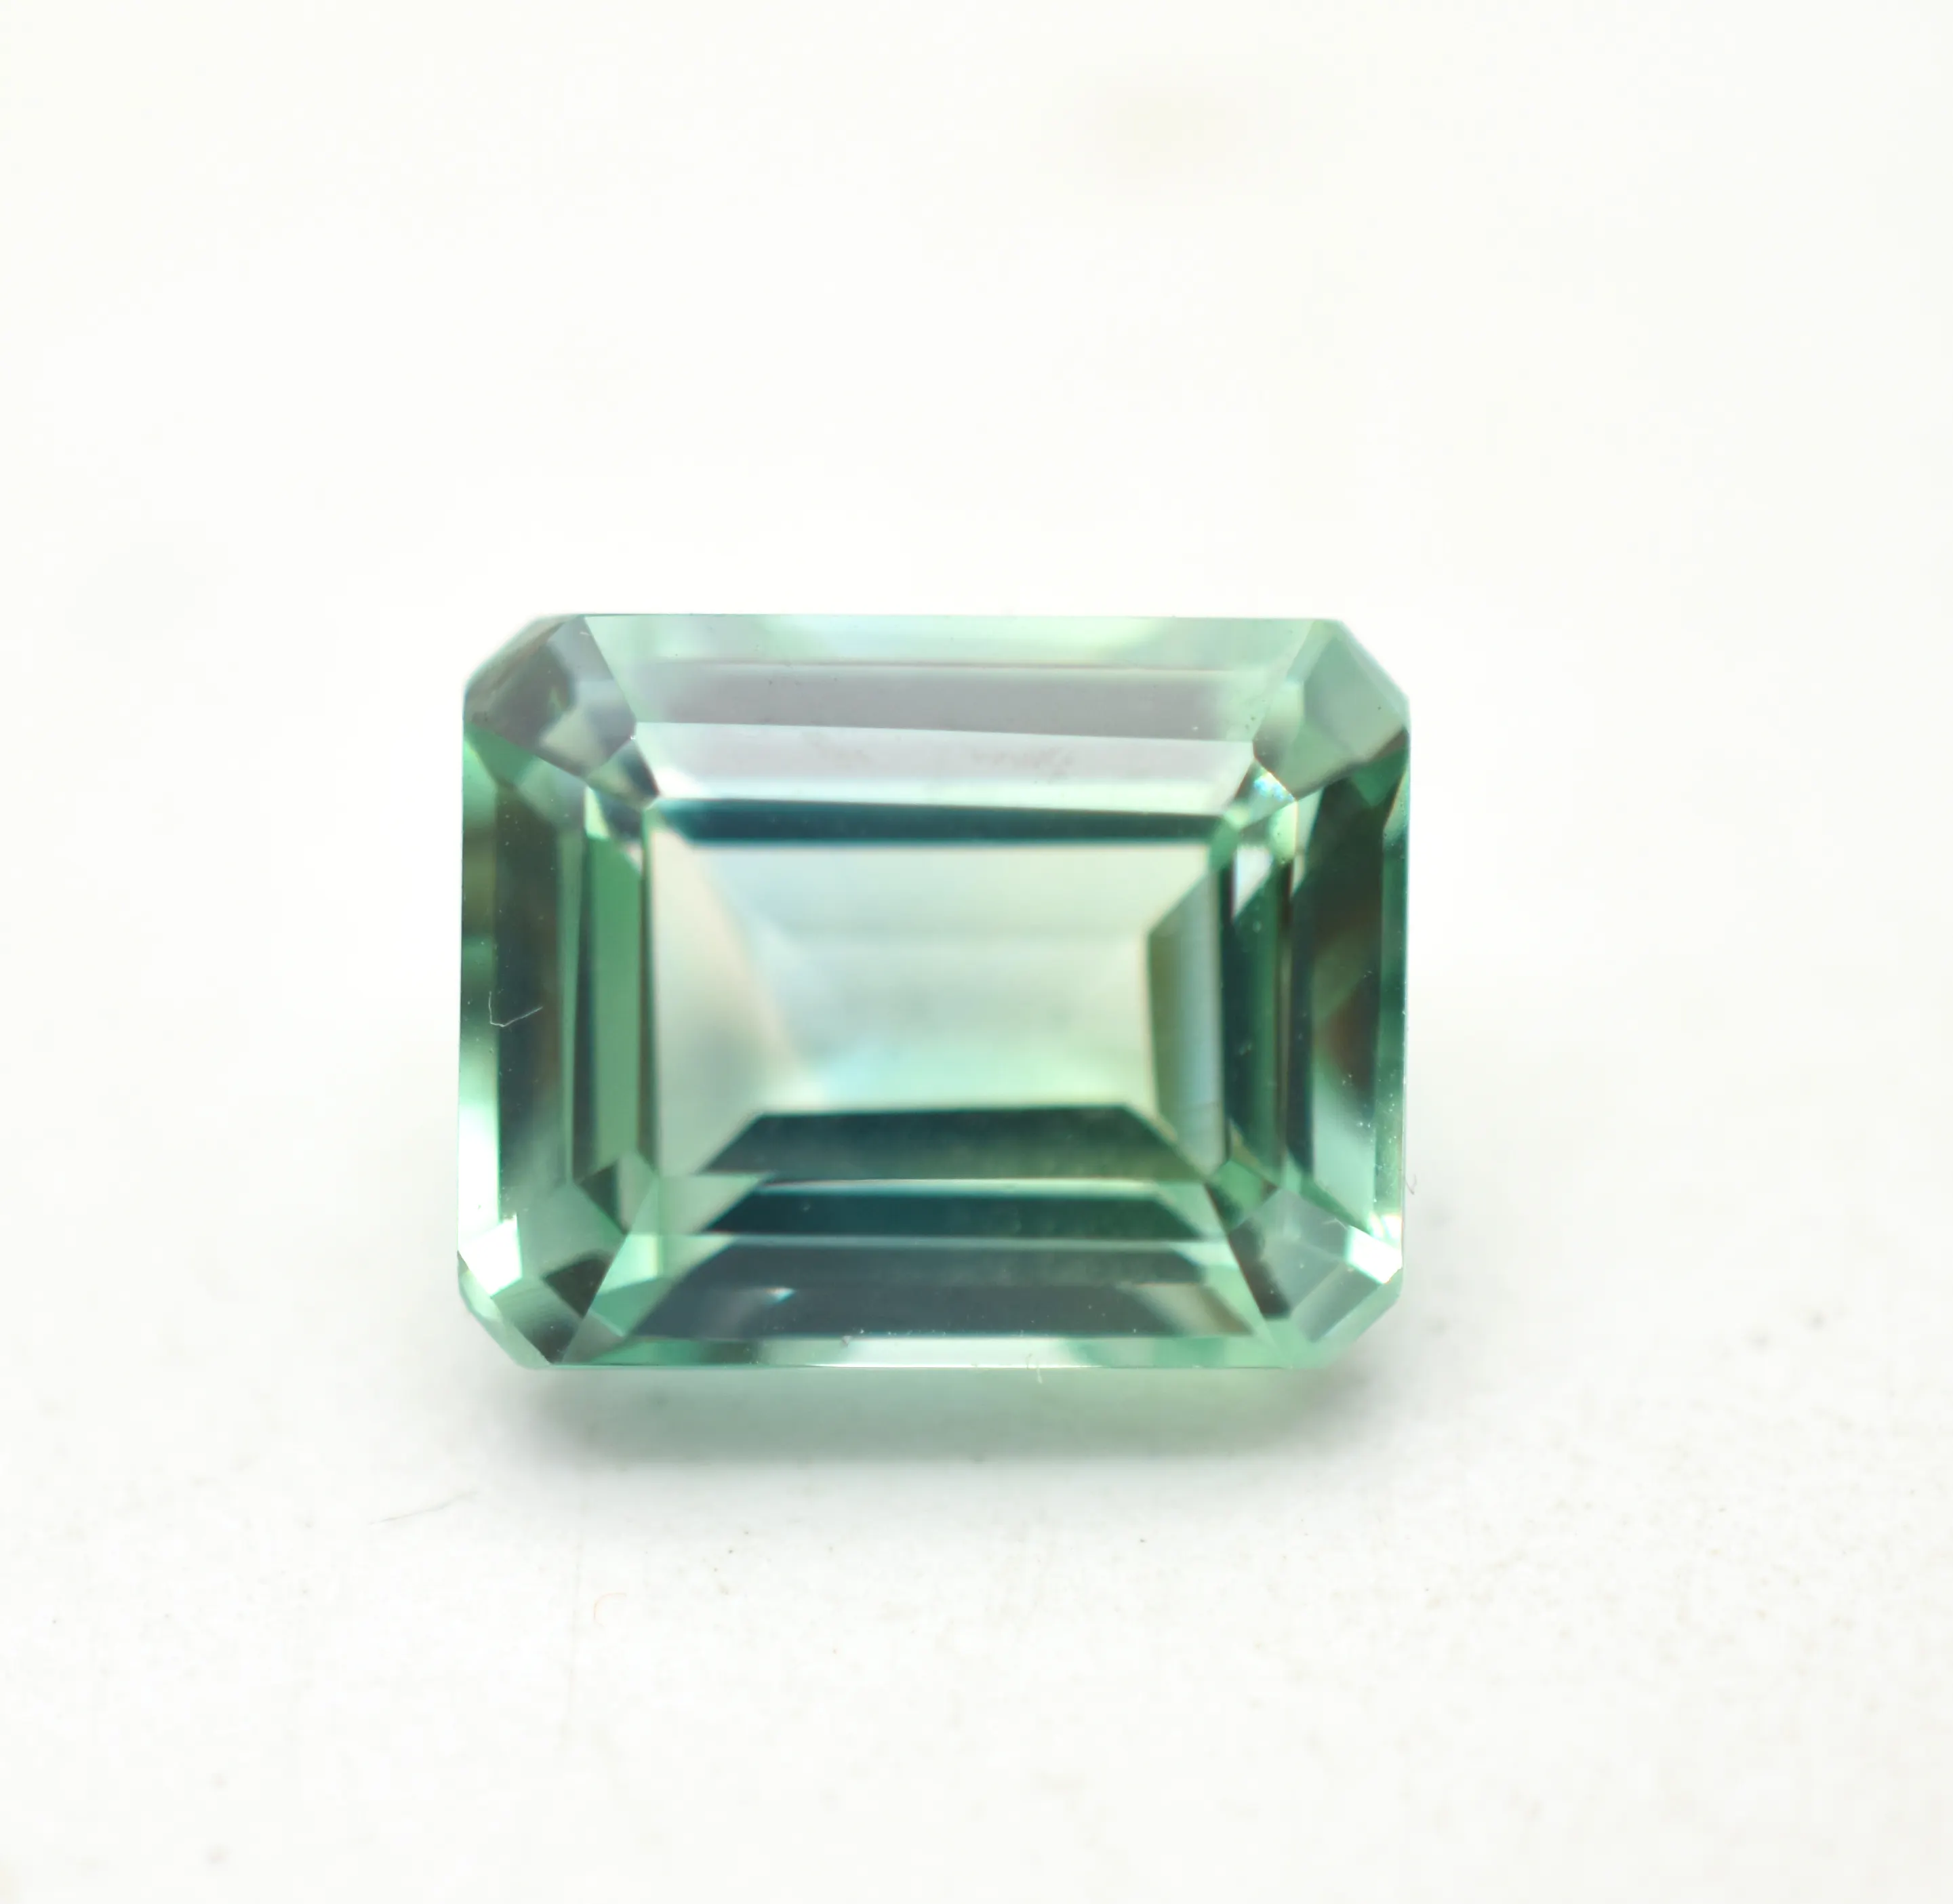 AAA High-End Glamorous Royal Mint Green Ceylon Sapphire Octagon Loose Gemstone Cut, Stunning Top Grade Precious Cut Stone & Ring